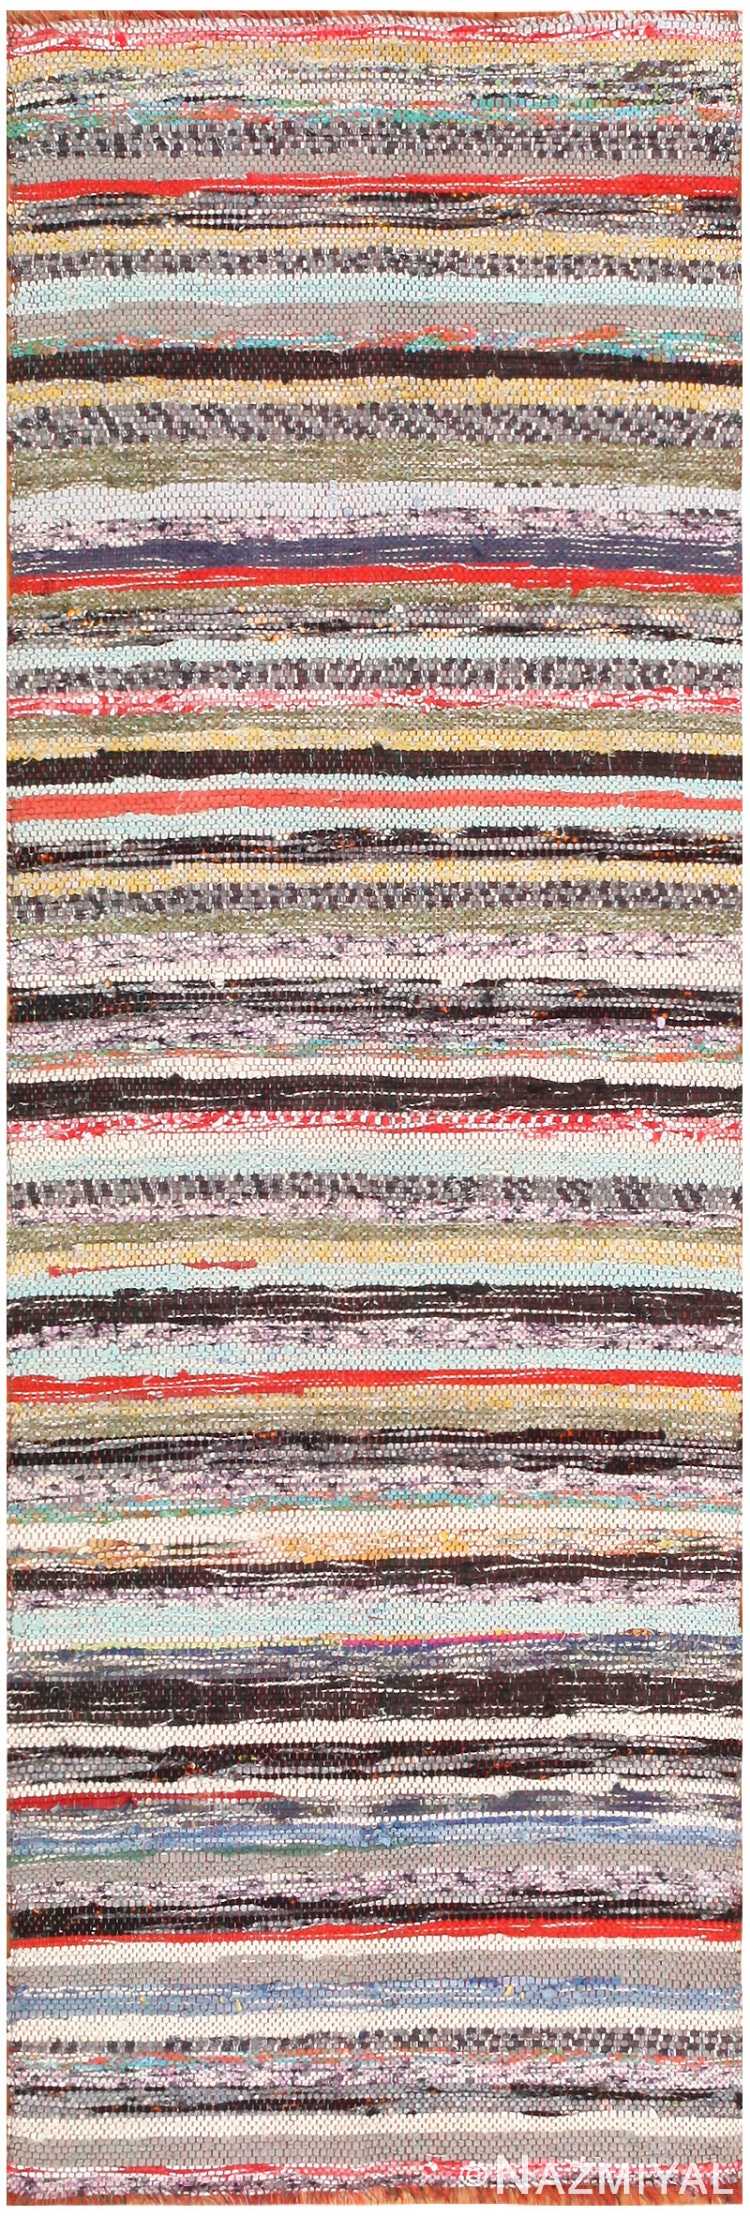 Colorful Vintage Swedish Striped Rag Runner Rug #46663 by Nazmiyal Antique Rugs